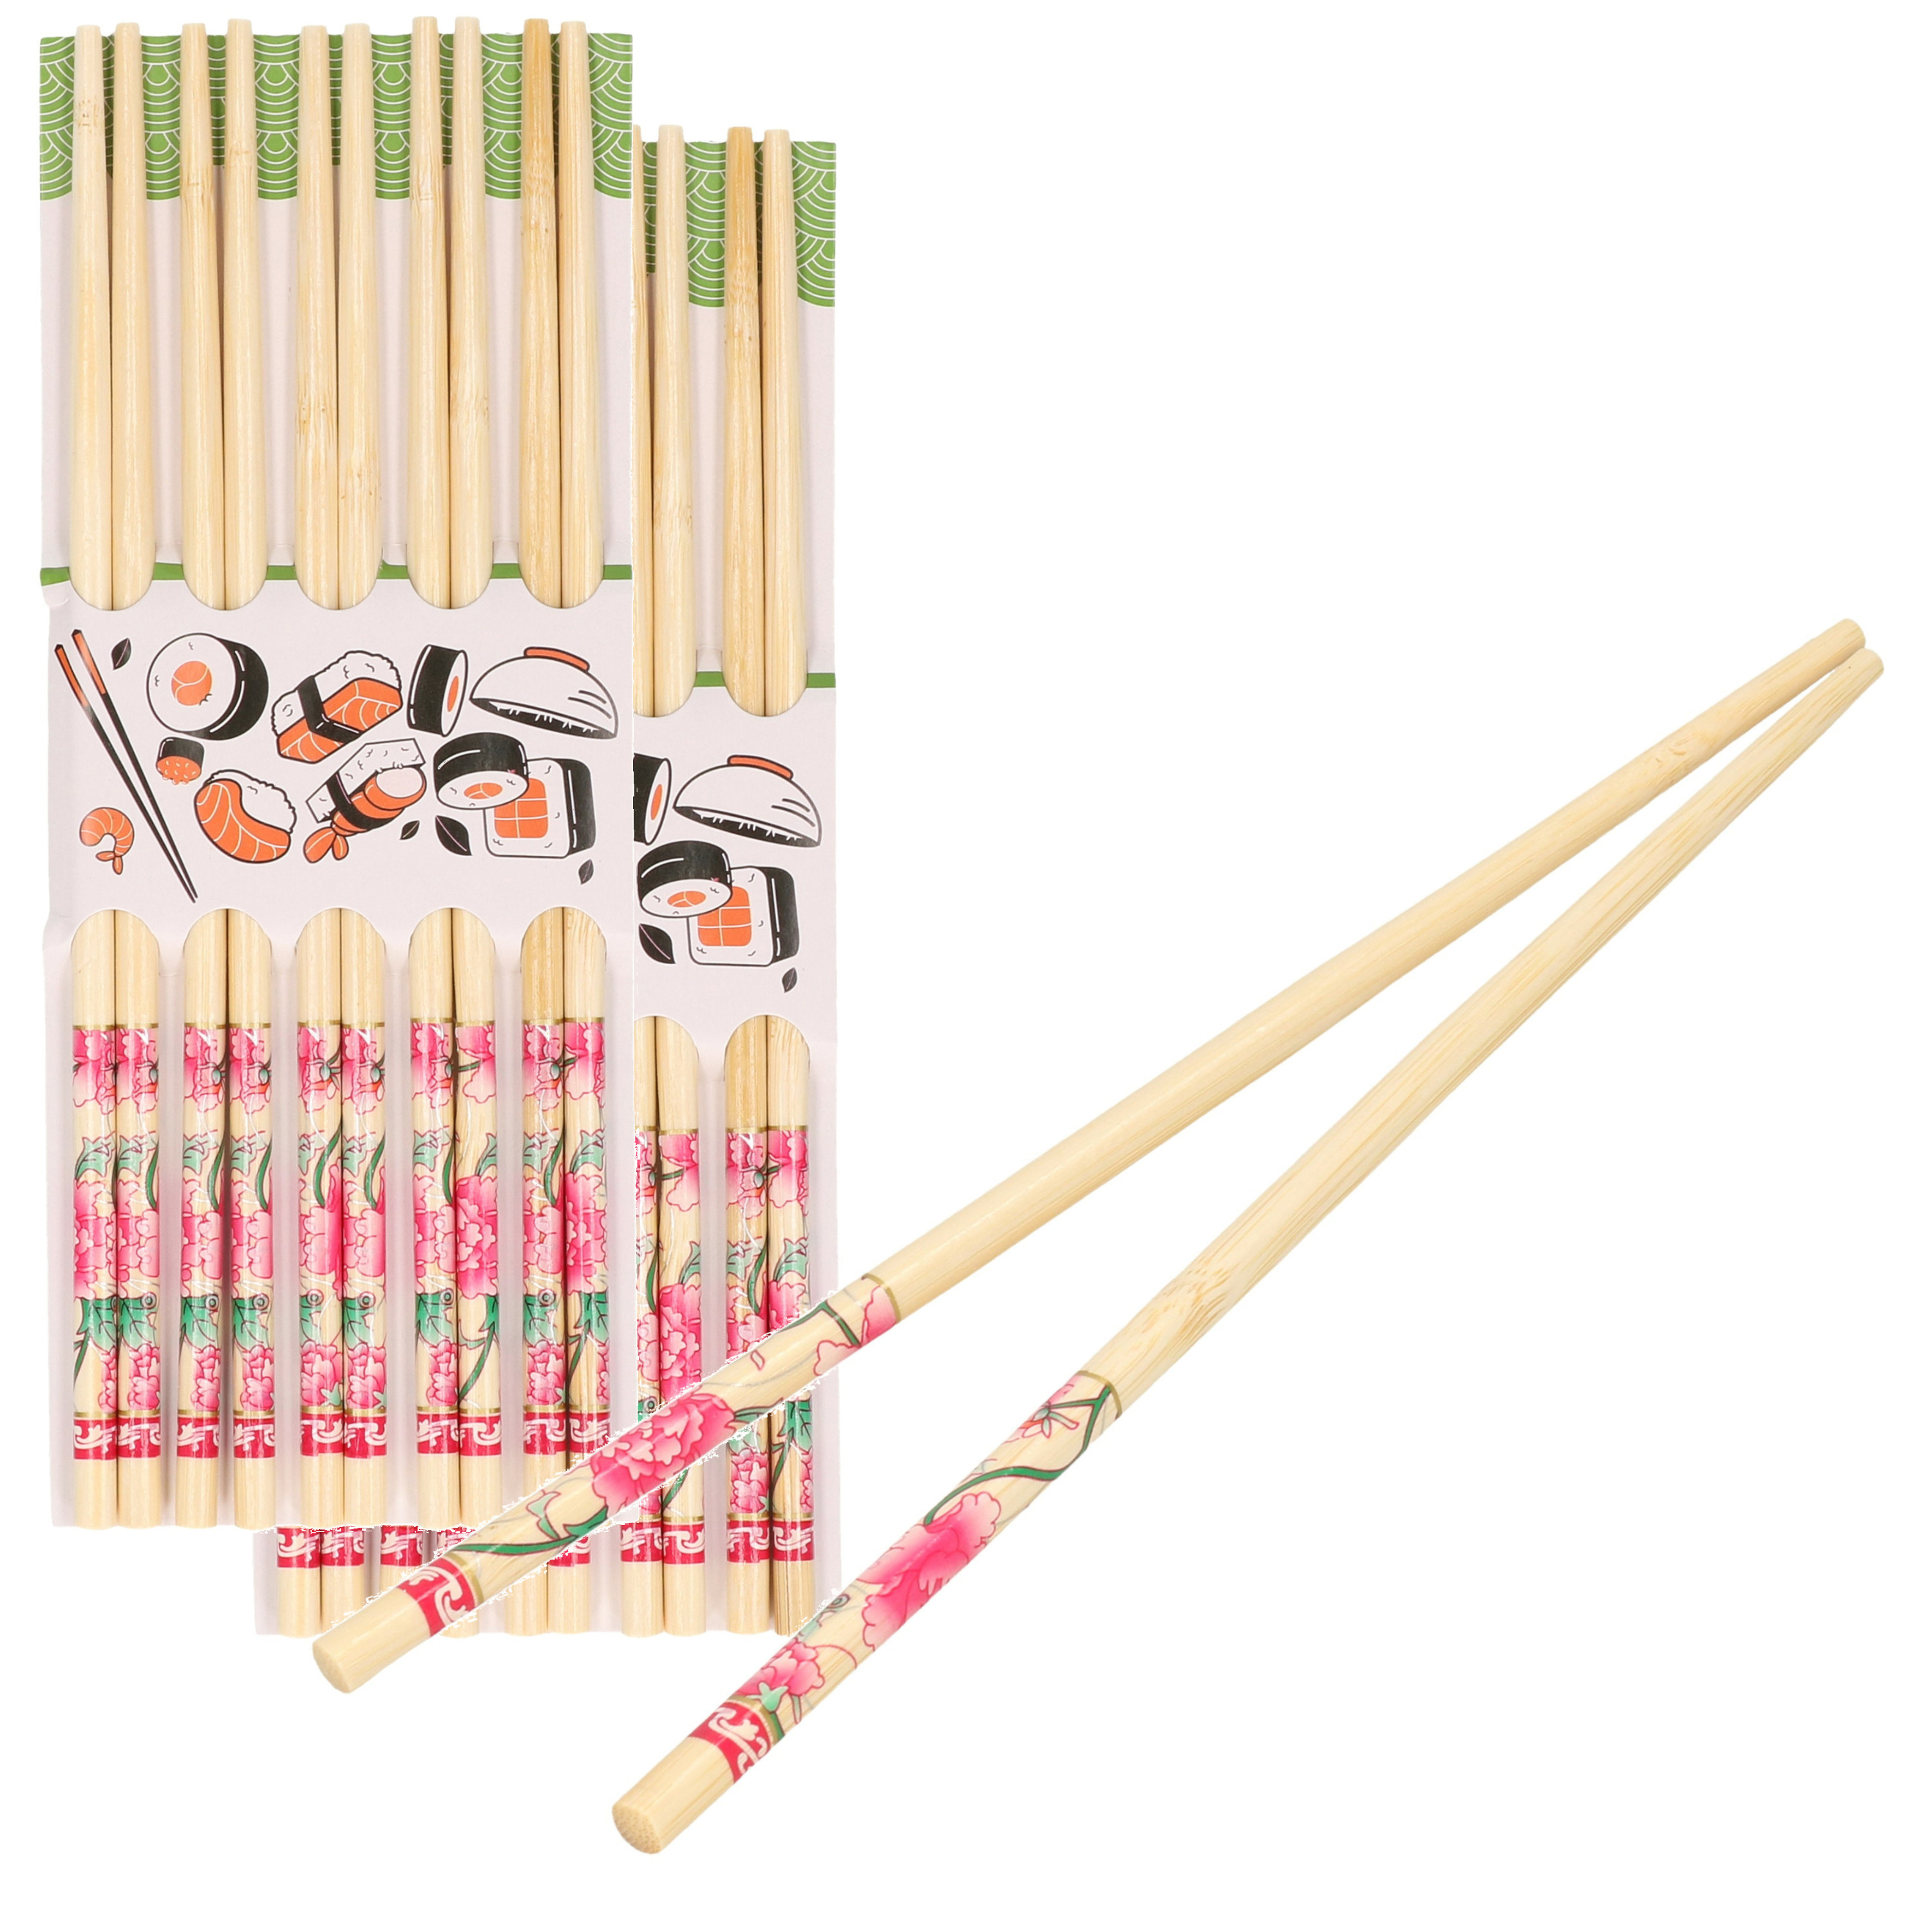 Sushi eetstokjes 20x setjes bamboe hout roze bloemen print 24 cm